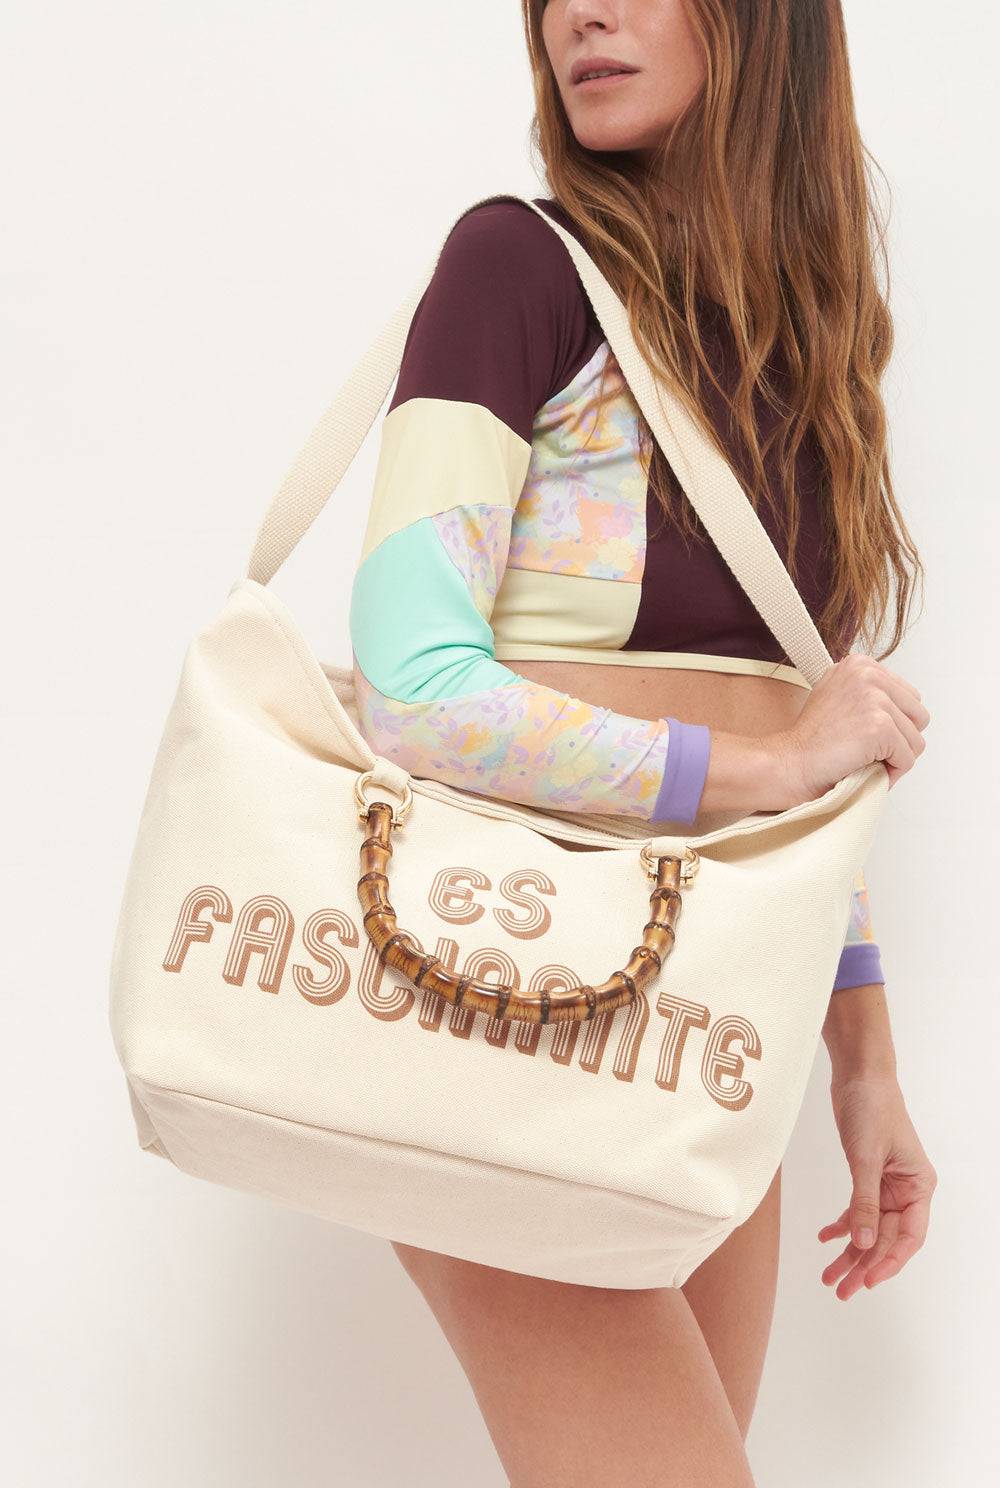 The easo bag - EXCLUSIVE ES FASCINANTE bag The Bag Lab